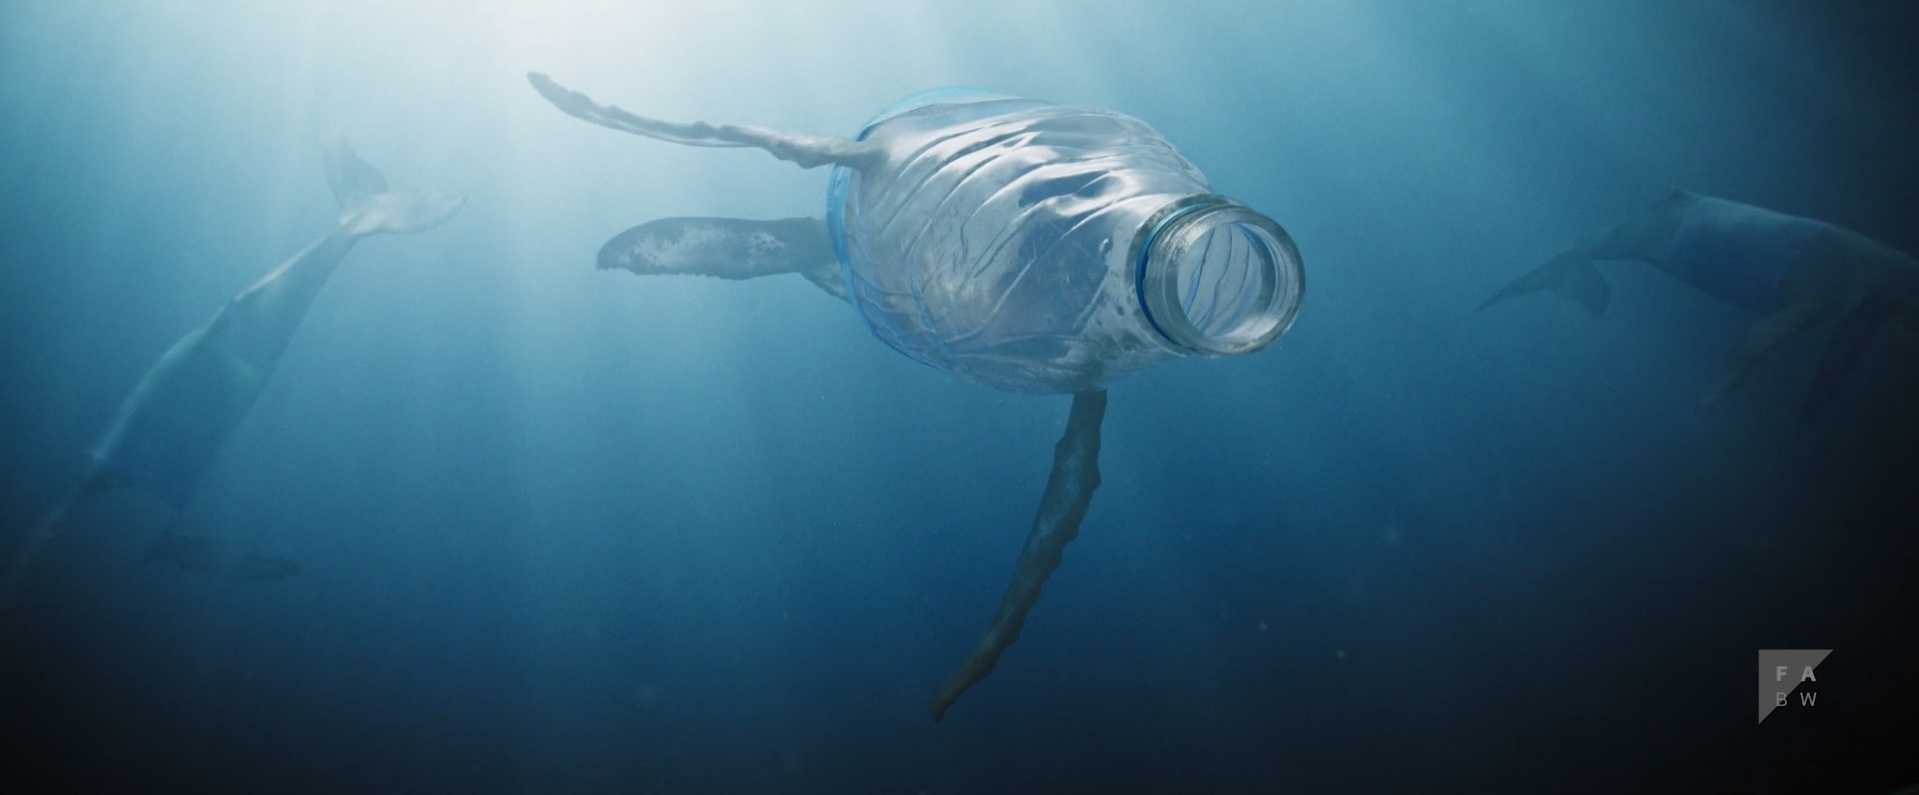 The Beauty : แอนิเมชันสั้นช็อคทุกสายตากับการกลายพันธุ์ครั้งใหม่ของสัตว์ใต้ท้องทะเล